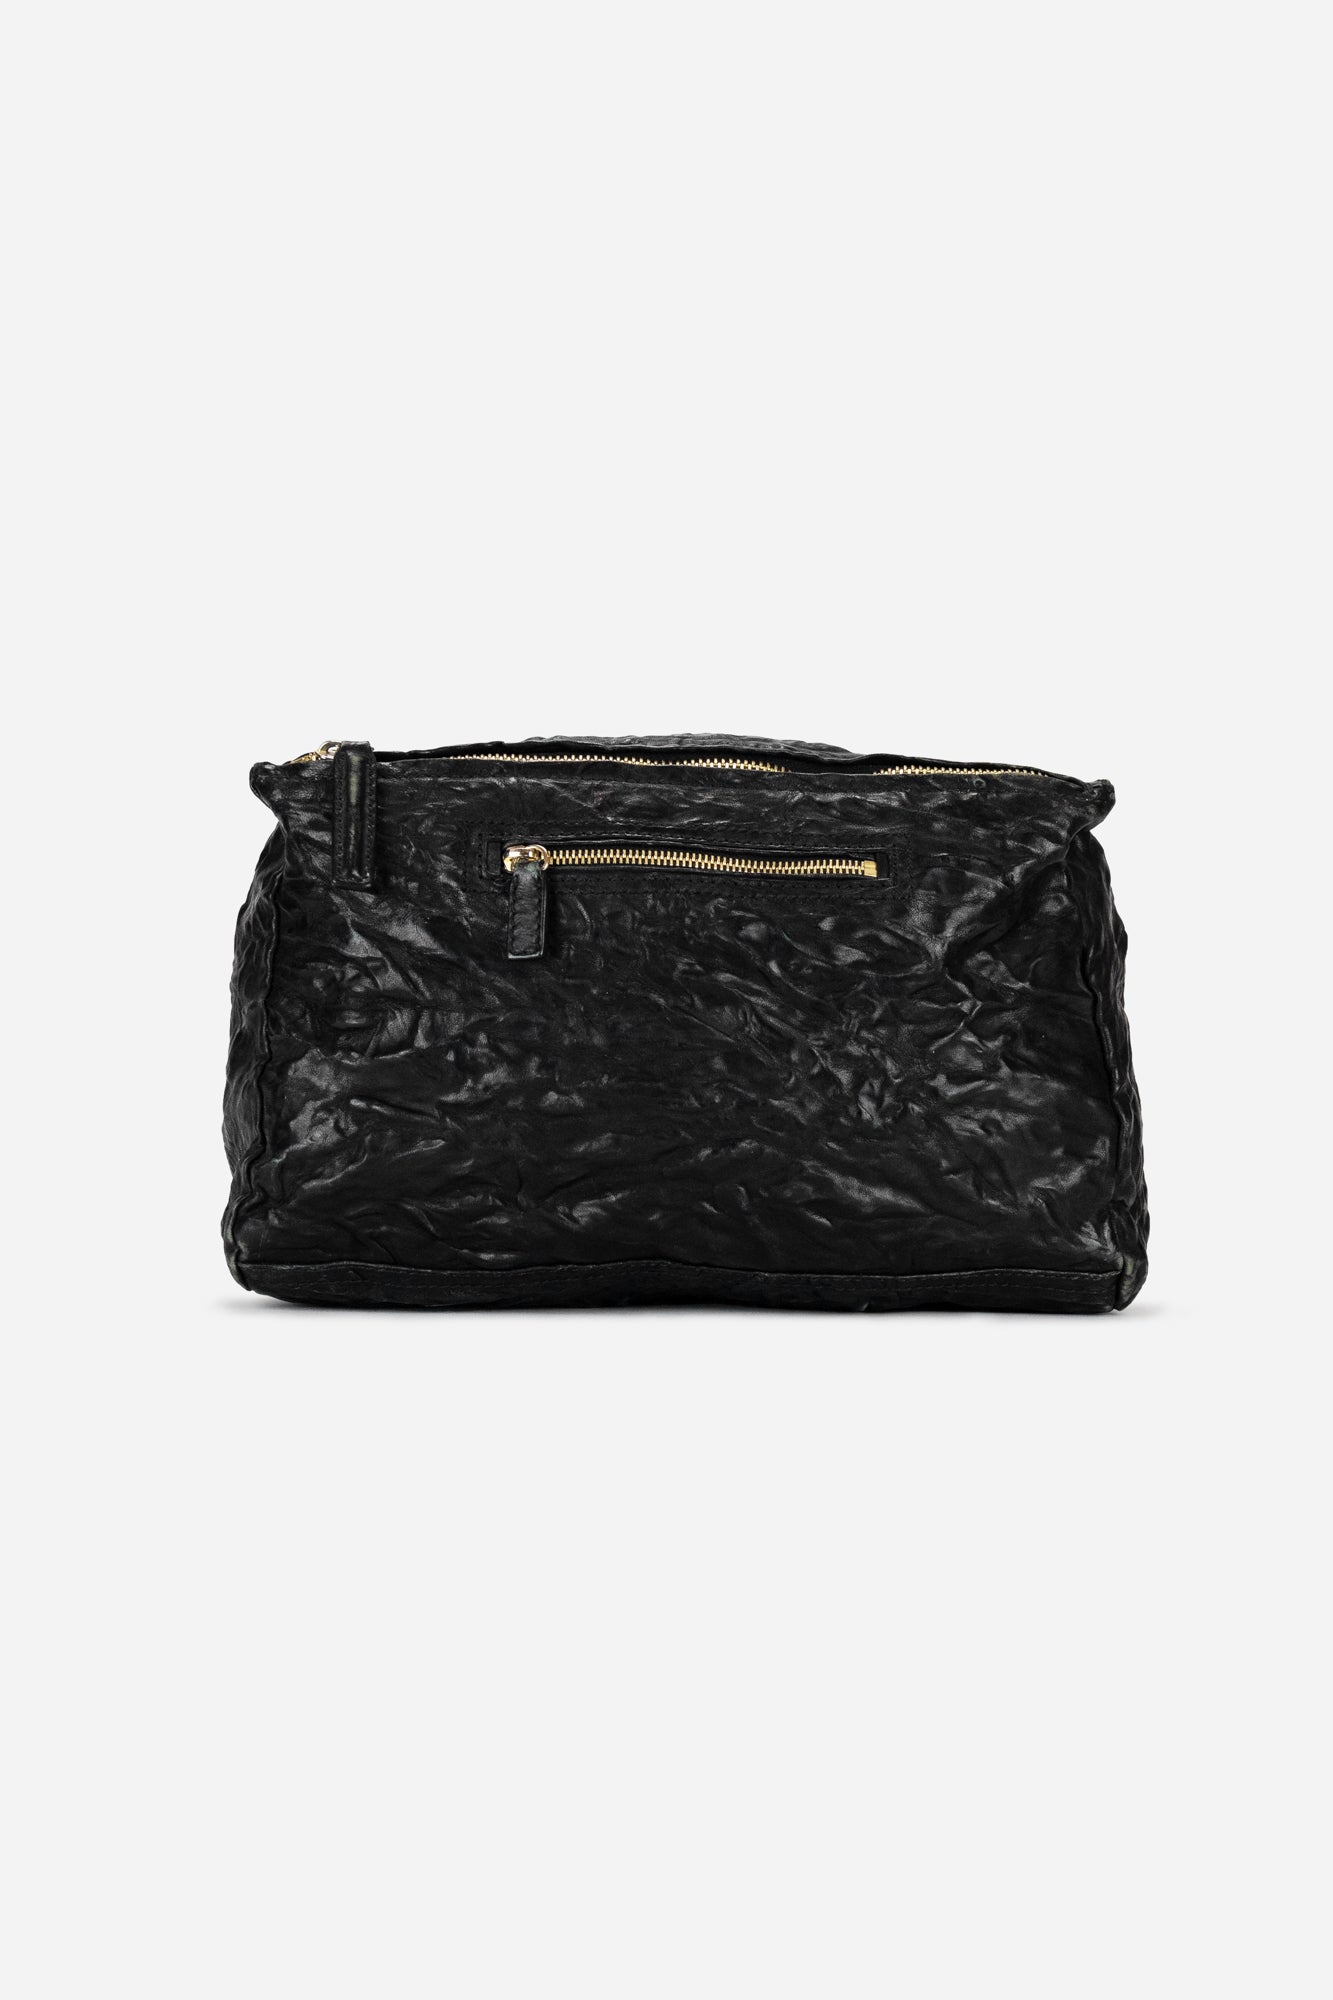 Black Distressed Leather Pandora Bag